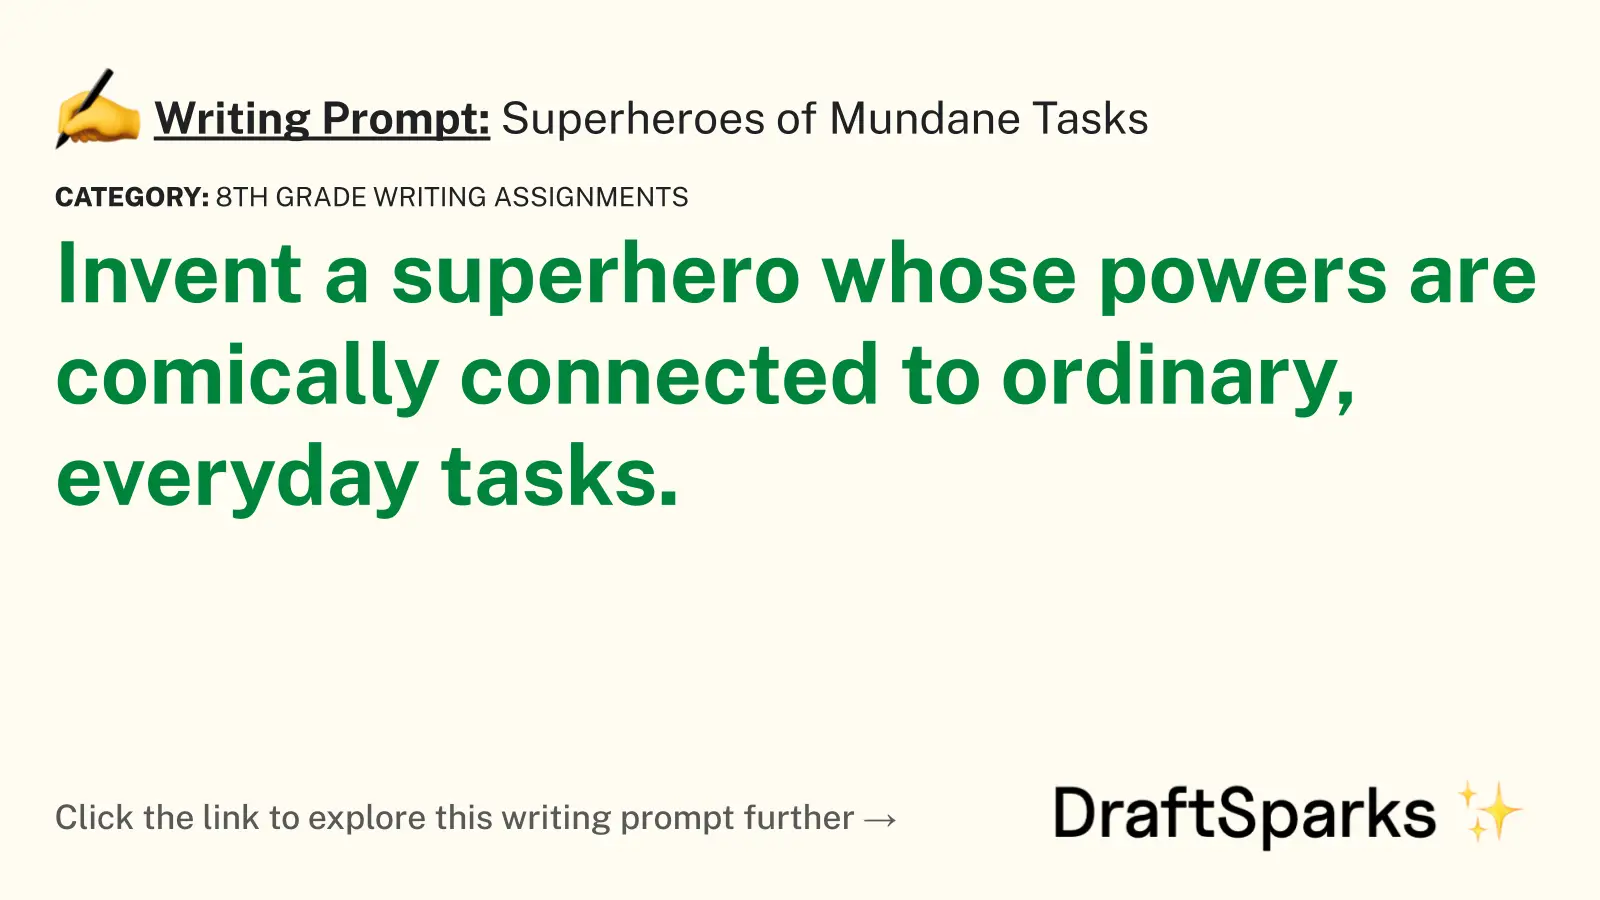 Superheroes of Mundane Tasks